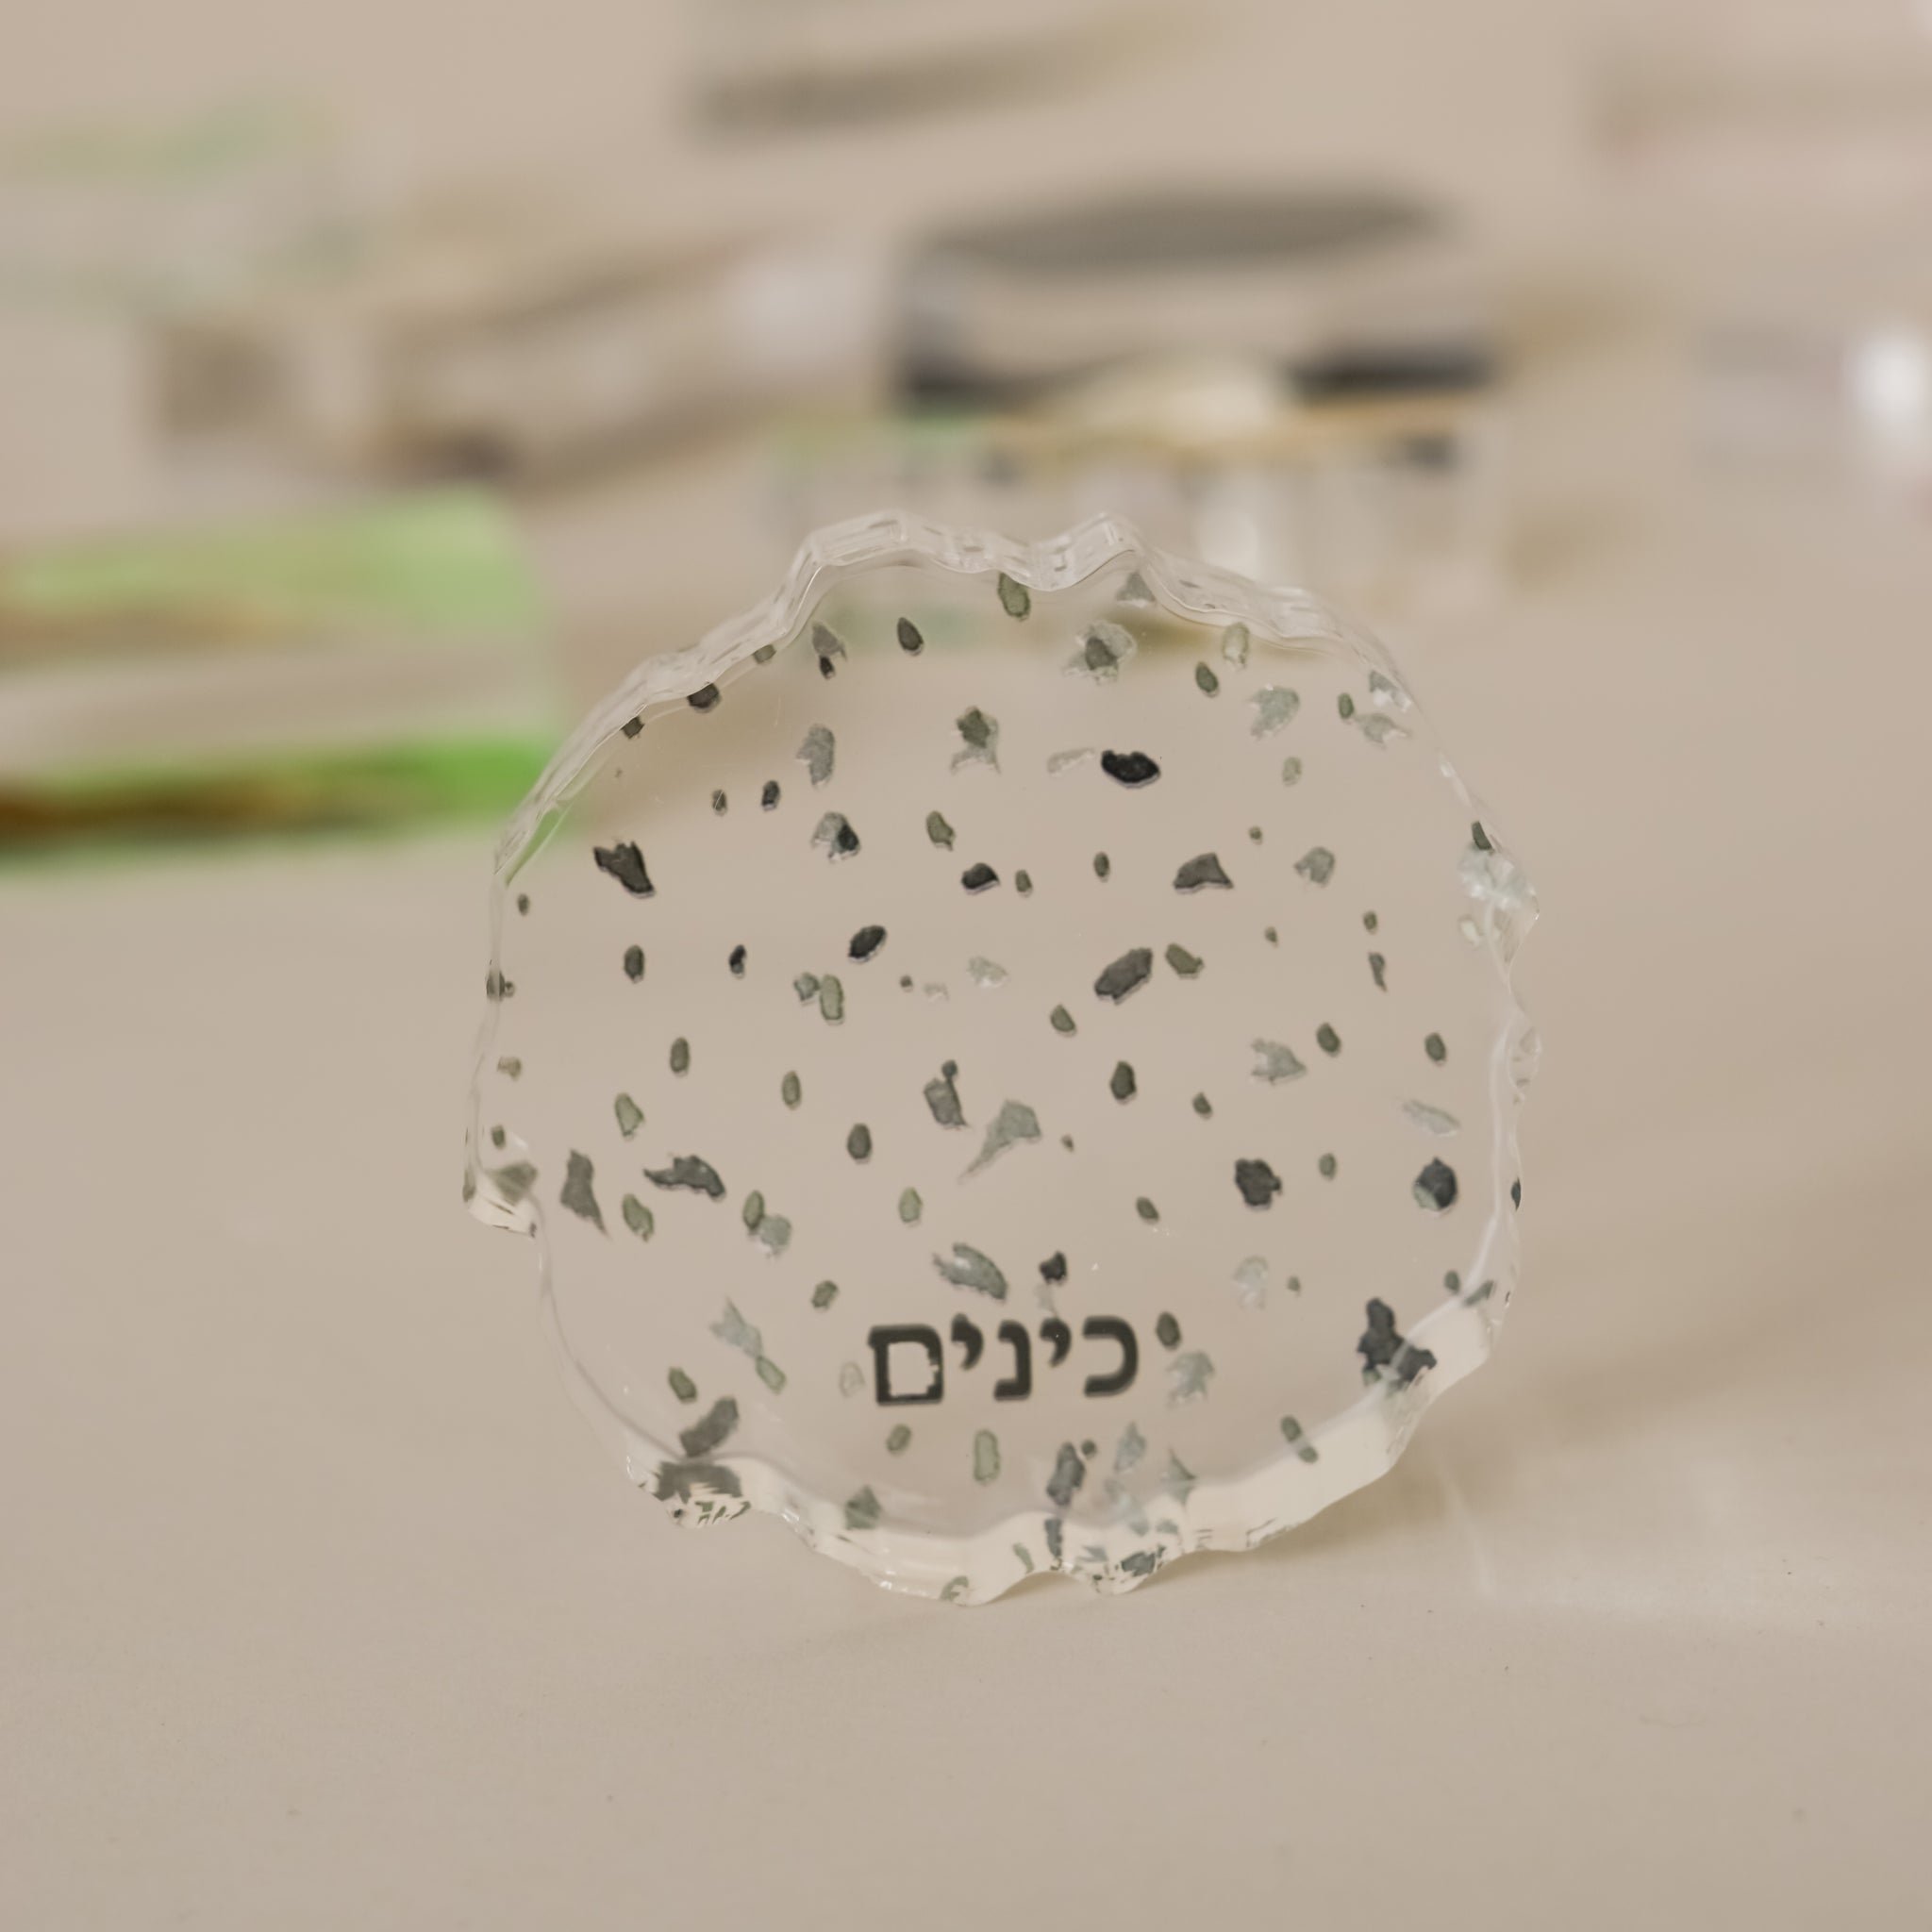 10 Plagues Interactive Acrylic Art | Passover